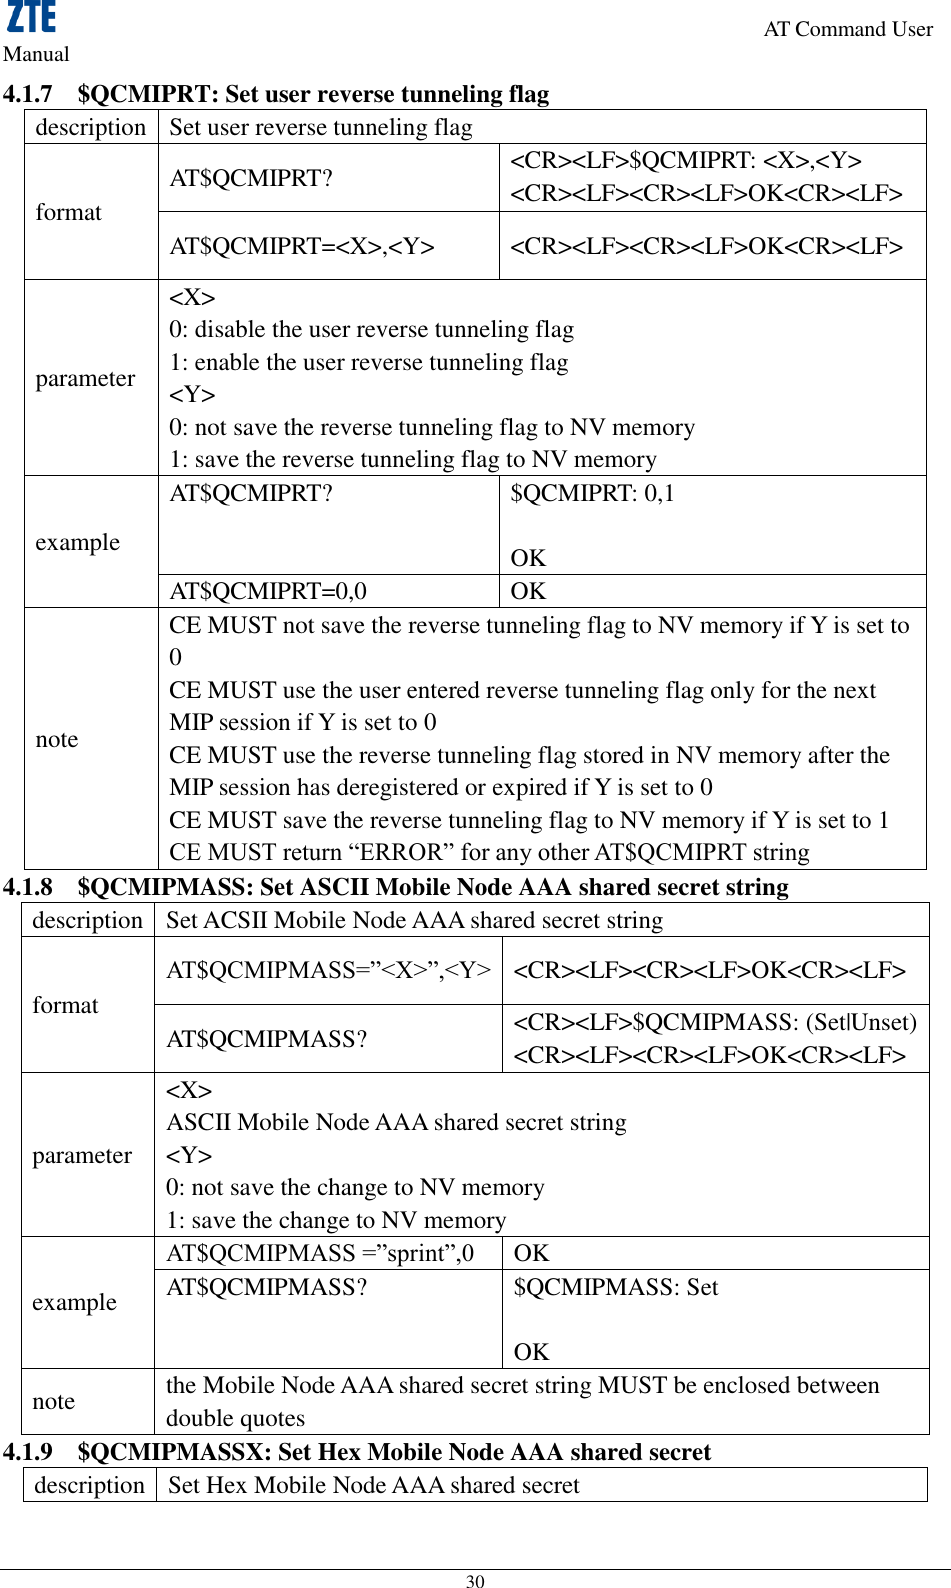                                                                     AT Command User Manual 30 4.1.7 $QCMIPRT: Set user reverse tunneling flag description Set user reverse tunneling flag format AT$QCMIPRT? &lt;CR&gt;&lt;LF&gt;$QCMIPRT: &lt;X&gt;,&lt;Y&gt; &lt;CR&gt;&lt;LF&gt;&lt;CR&gt;&lt;LF&gt;OK&lt;CR&gt;&lt;LF&gt; AT$QCMIPRT=&lt;X&gt;,&lt;Y&gt; &lt;CR&gt;&lt;LF&gt;&lt;CR&gt;&lt;LF&gt;OK&lt;CR&gt;&lt;LF&gt; parameter &lt;X&gt; 0: disable the user reverse tunneling flag 1: enable the user reverse tunneling flag &lt;Y&gt; 0: not save the reverse tunneling flag to NV memory 1: save the reverse tunneling flag to NV memory example AT$QCMIPRT? $QCMIPRT: 0,1  OK AT$QCMIPRT=0,0 OK note CE MUST not save the reverse tunneling flag to NV memory if Y is set to 0   CE MUST use the user entered reverse tunneling flag only for the next MIP session if Y is set to 0   CE MUST use the reverse tunneling flag stored in NV memory after the MIP session has deregistered or expired if Y is set to 0   CE MUST save the reverse tunneling flag to NV memory if Y is set to 1   CE MUST return “ERROR” for any other AT$QCMIPRT string 4.1.8 $QCMIPMASS: Set ASCII Mobile Node AAA shared secret string description Set ACSII Mobile Node AAA shared secret string   format AT$QCMIPMASS=”&lt;X&gt;”,&lt;Y&gt; &lt;CR&gt;&lt;LF&gt;&lt;CR&gt;&lt;LF&gt;OK&lt;CR&gt;&lt;LF&gt; AT$QCMIPMASS? &lt;CR&gt;&lt;LF&gt;$QCMIPMASS: (Set|Unset) &lt;CR&gt;&lt;LF&gt;&lt;CR&gt;&lt;LF&gt;OK&lt;CR&gt;&lt;LF&gt; parameter &lt;X&gt; ASCII Mobile Node AAA shared secret string   &lt;Y&gt; 0: not save the change to NV memory 1: save the change to NV memory example AT$QCMIPMASS =”sprint”,0 OK AT$QCMIPMASS? $QCMIPMASS: Set  OK note the Mobile Node AAA shared secret string MUST be enclosed between double quotes 4.1.9 $QCMIPMASSX: Set Hex Mobile Node AAA shared secret description Set Hex Mobile Node AAA shared secret 